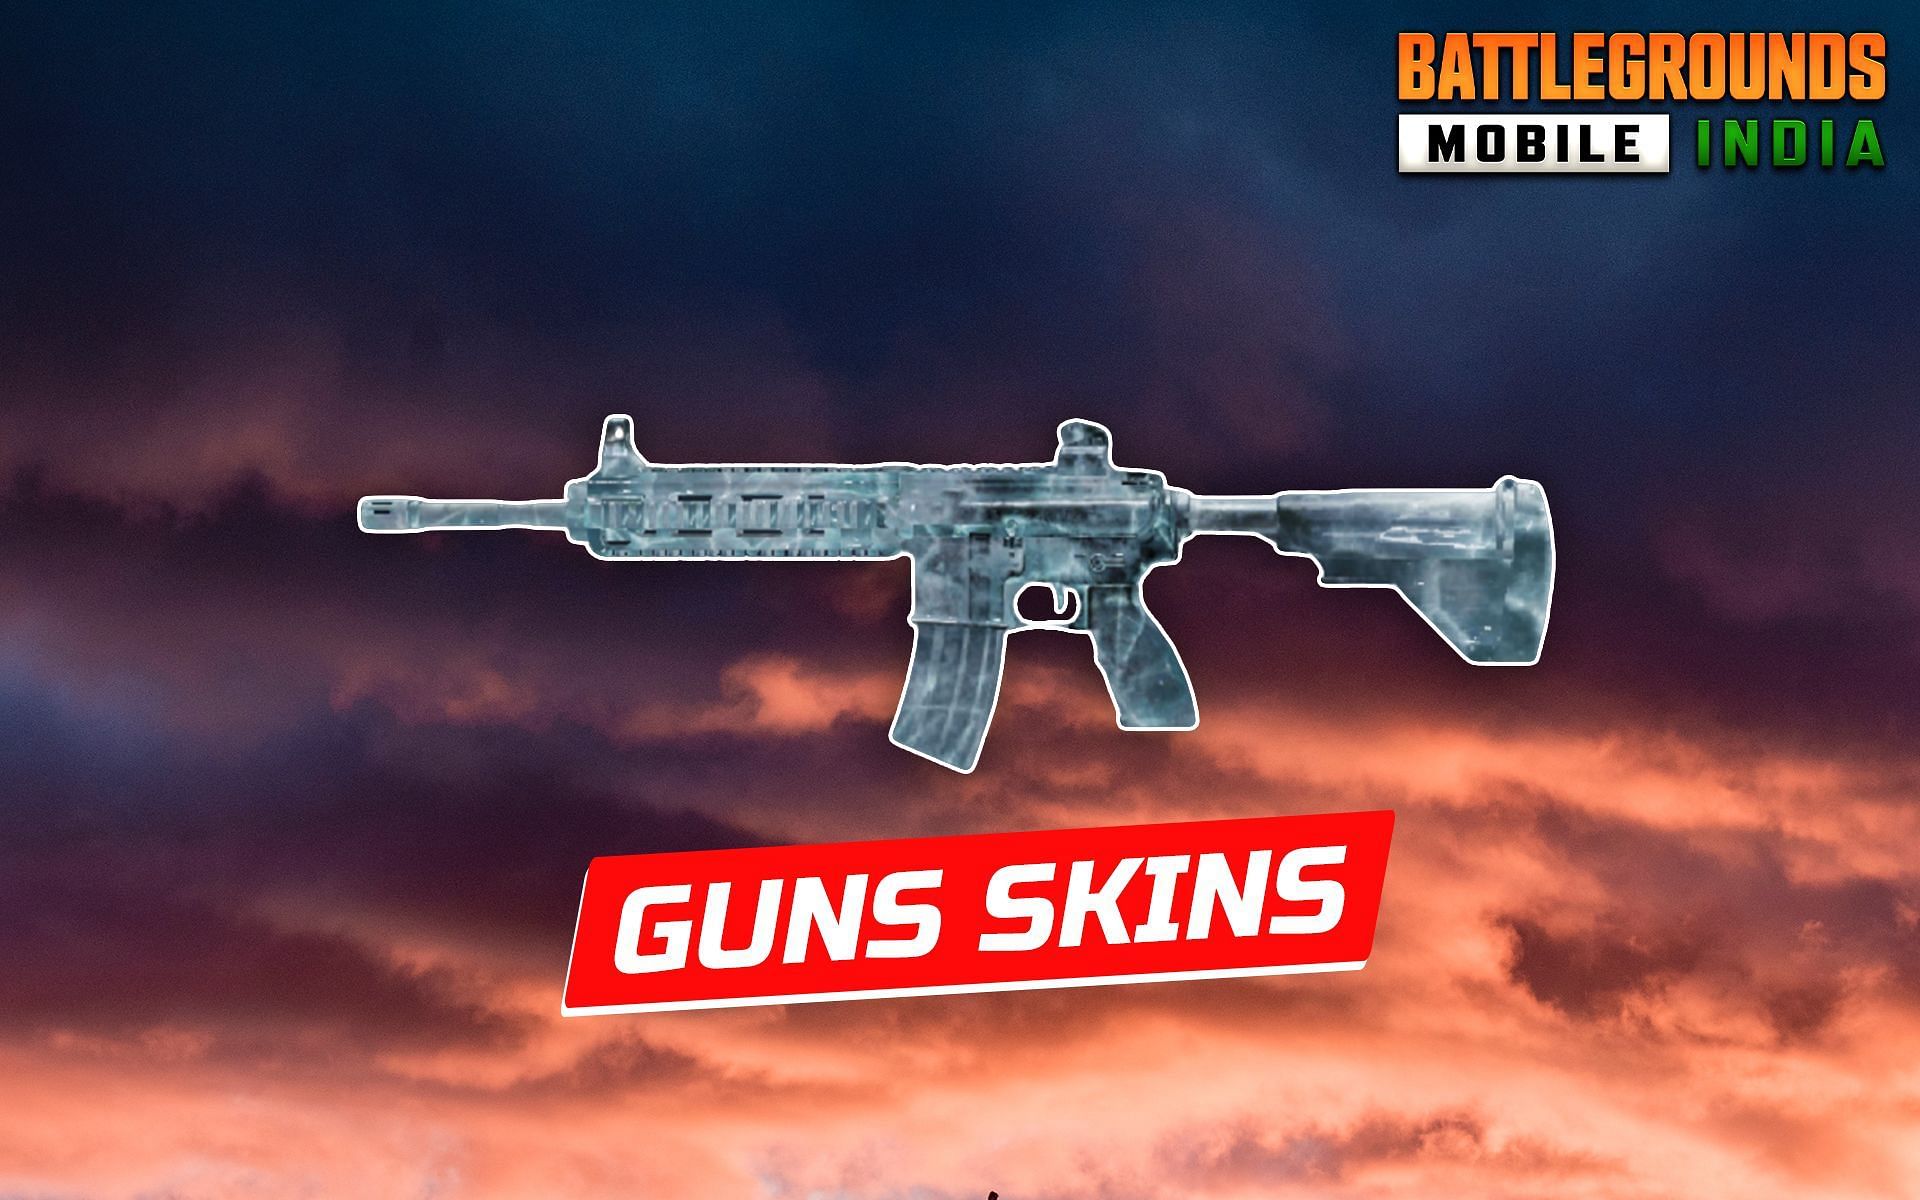 Several new gun skins have appeared in BGMI (Image via Sportskeeda)